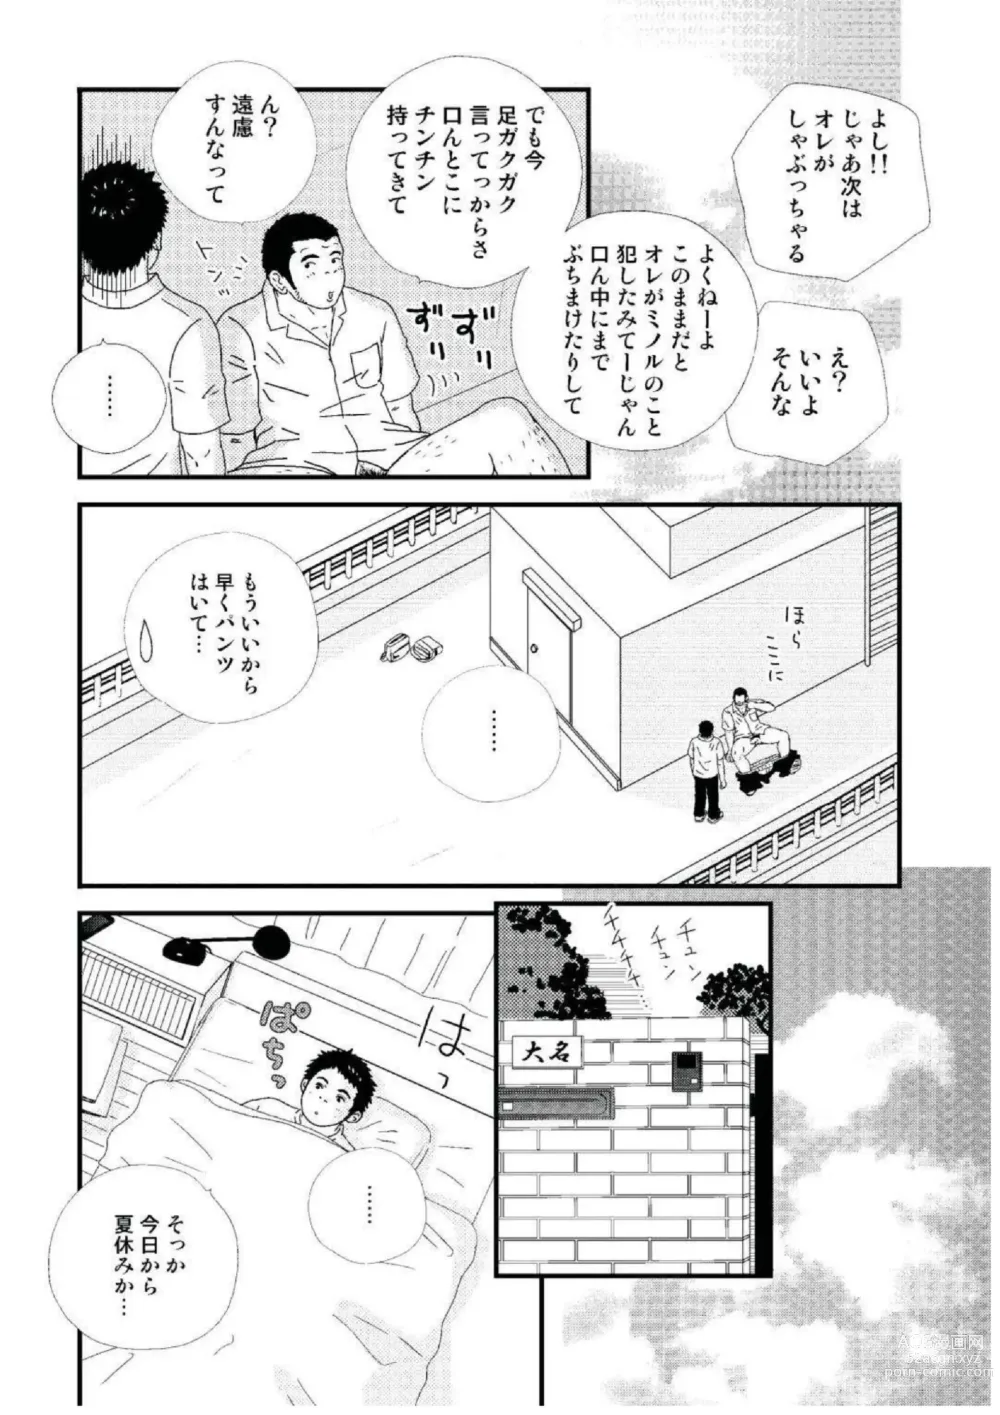 Page 10 of manga SUCK!